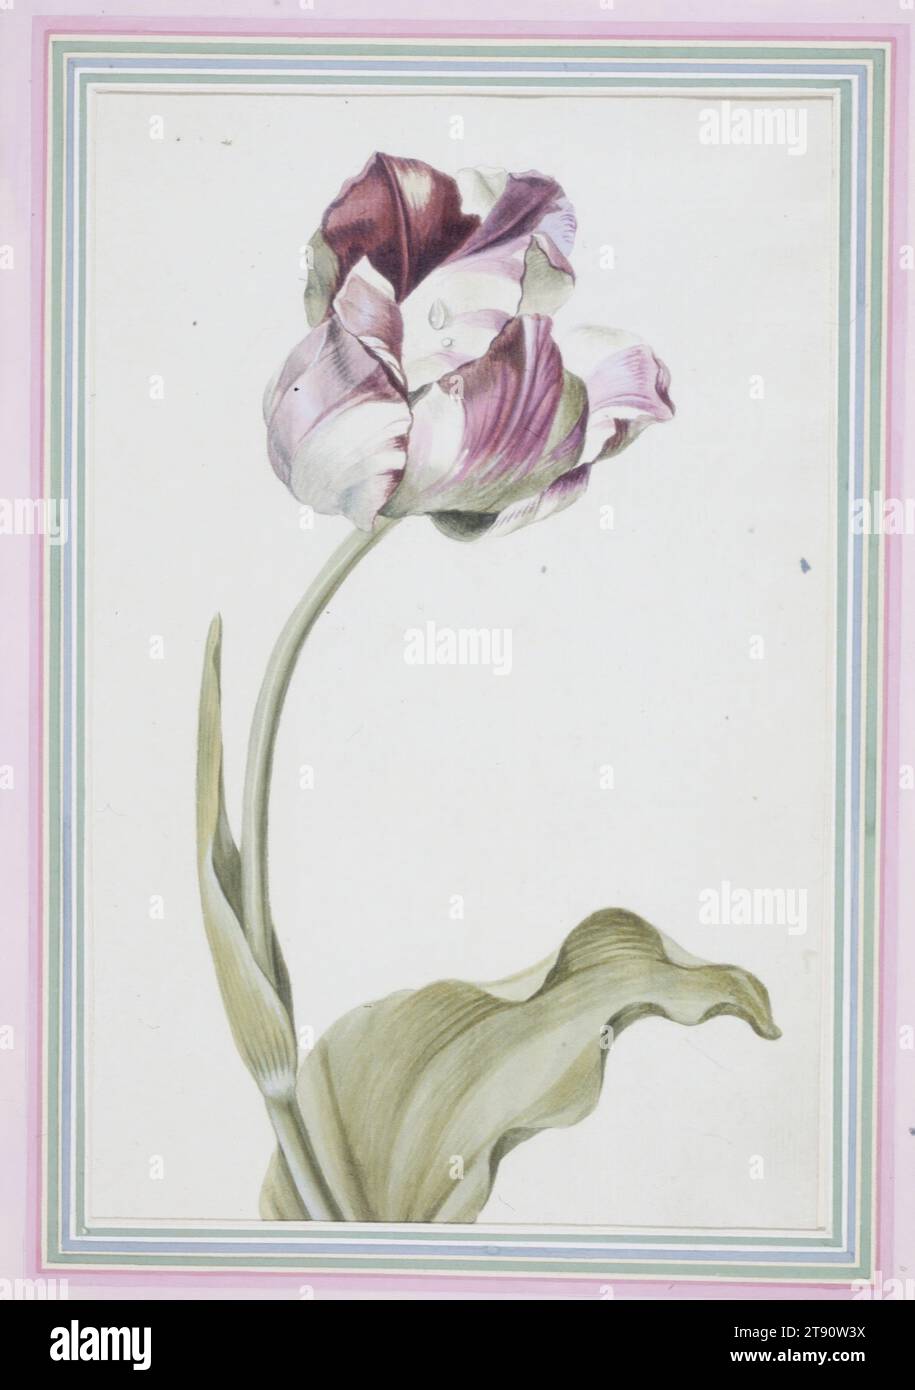 Tulipa gesneriana (Didier's Tulip), 1816, Josepha Tusch, Austrian, active 1810-1816, 11 1/4 x 5 1/4 in. (28.58 x 13.34 cm) (image)12 3/4 x 8 11/16 in. (32.39 x 22.07 cm) (sheet), Watercolor, Austria, 19th century Stock Photo